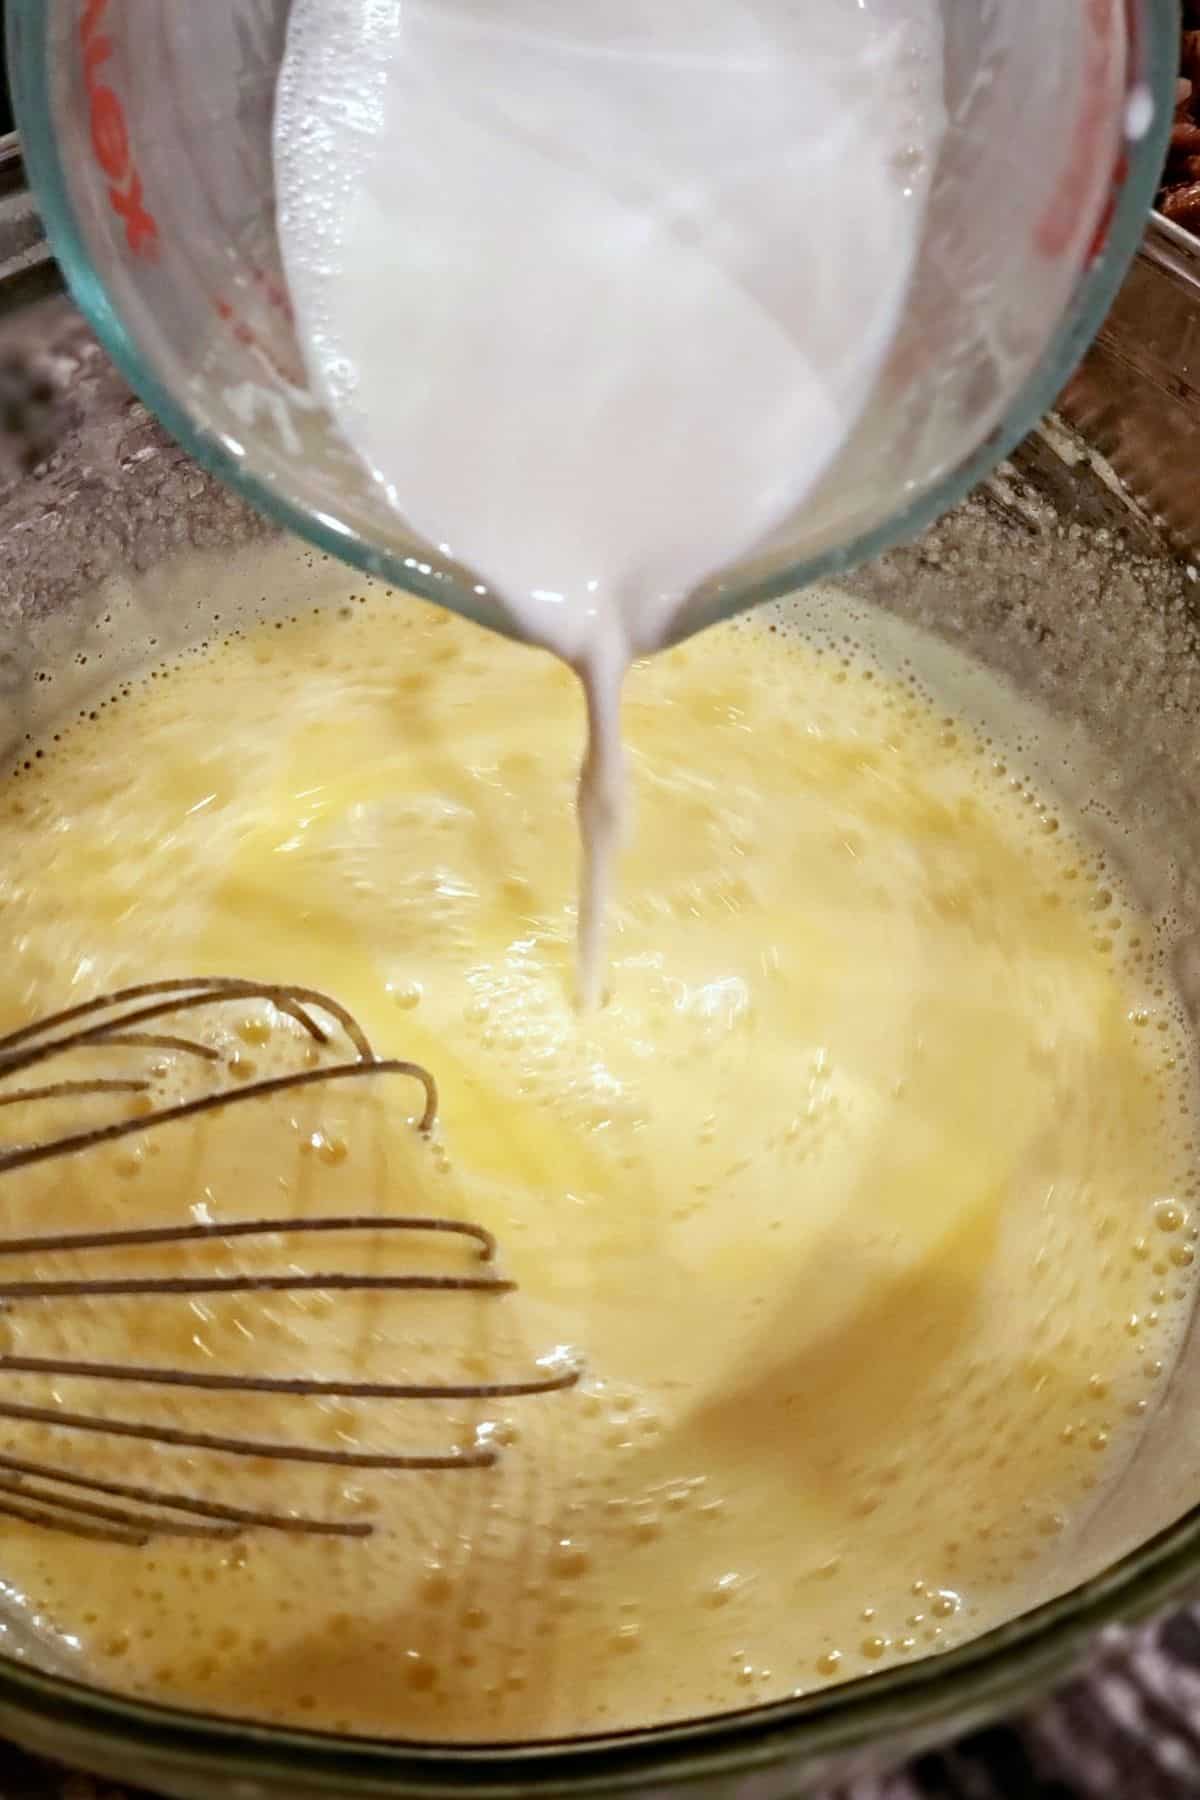 Adding milk to a bowl.